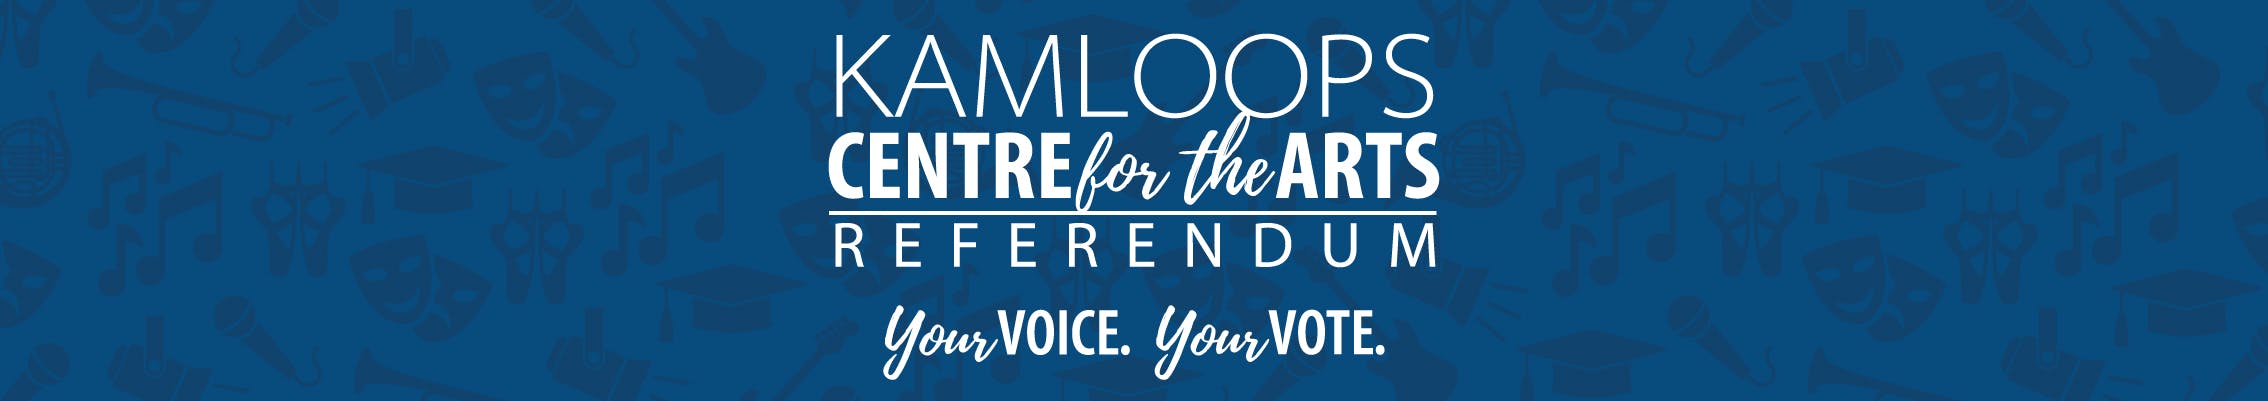 Kamloops Centre for the Arts Referendum